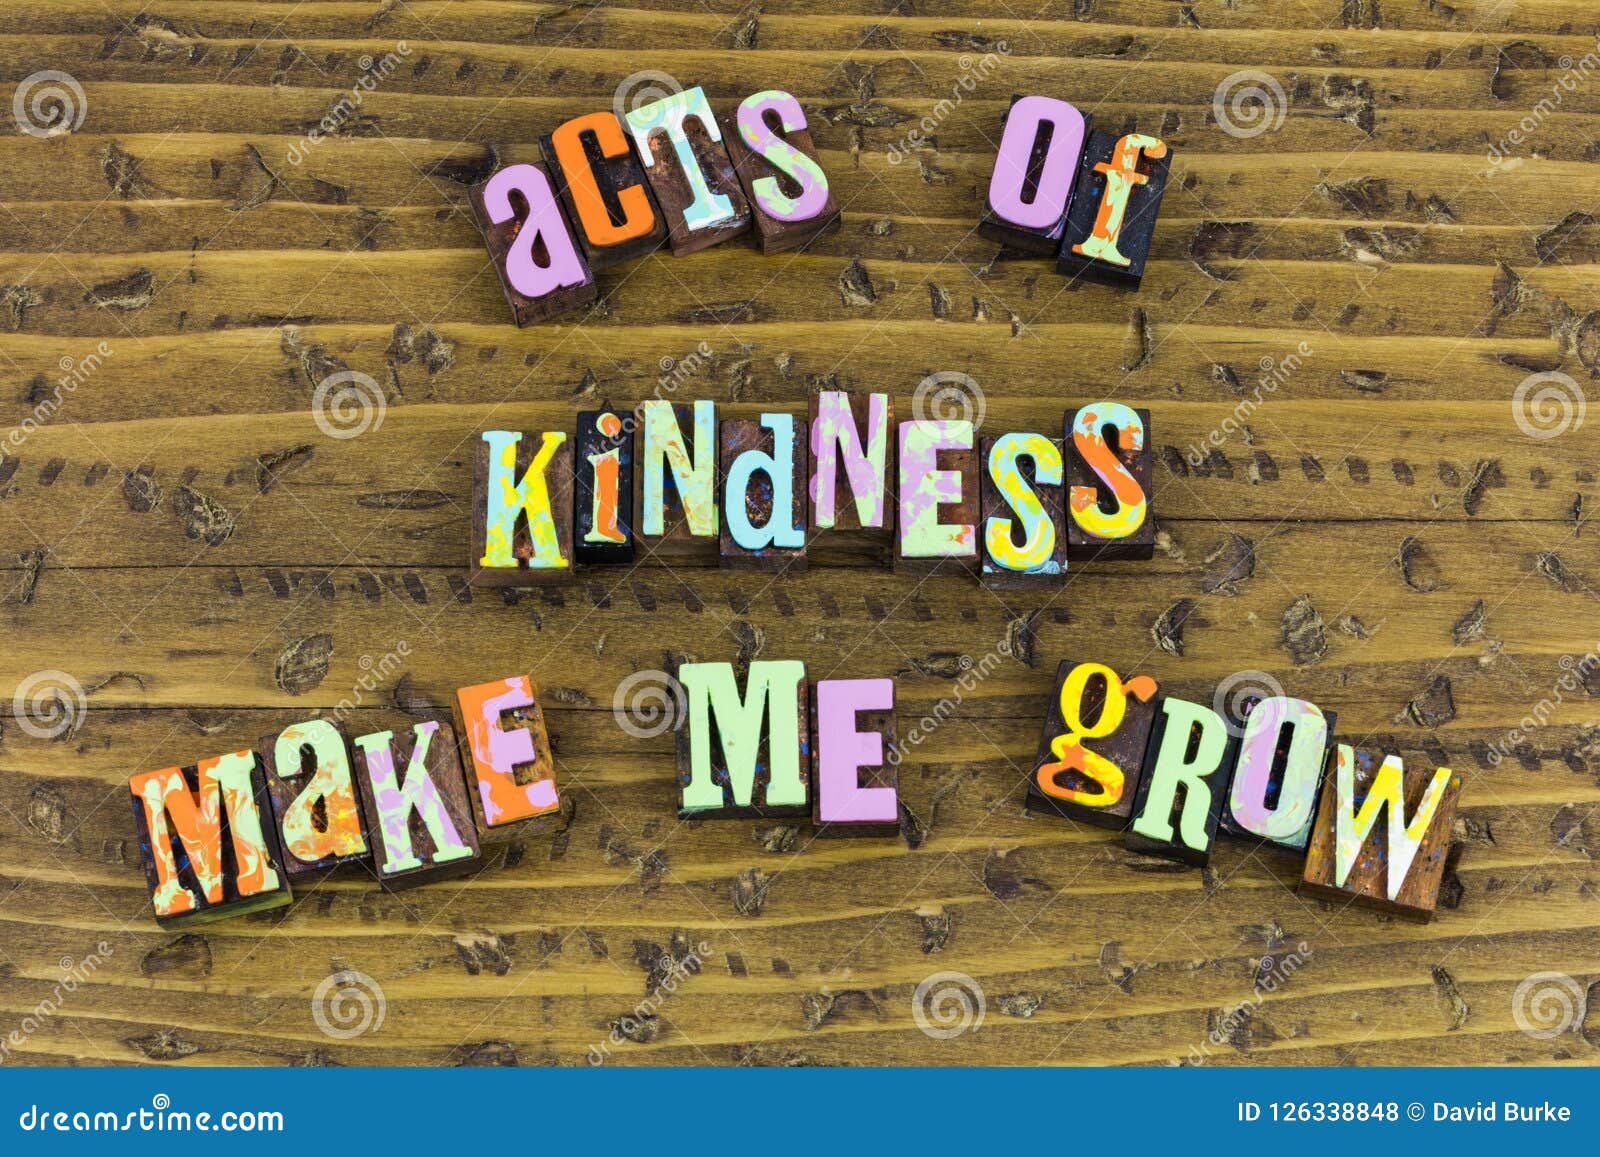 random acts kindness grace good kind gentle character help